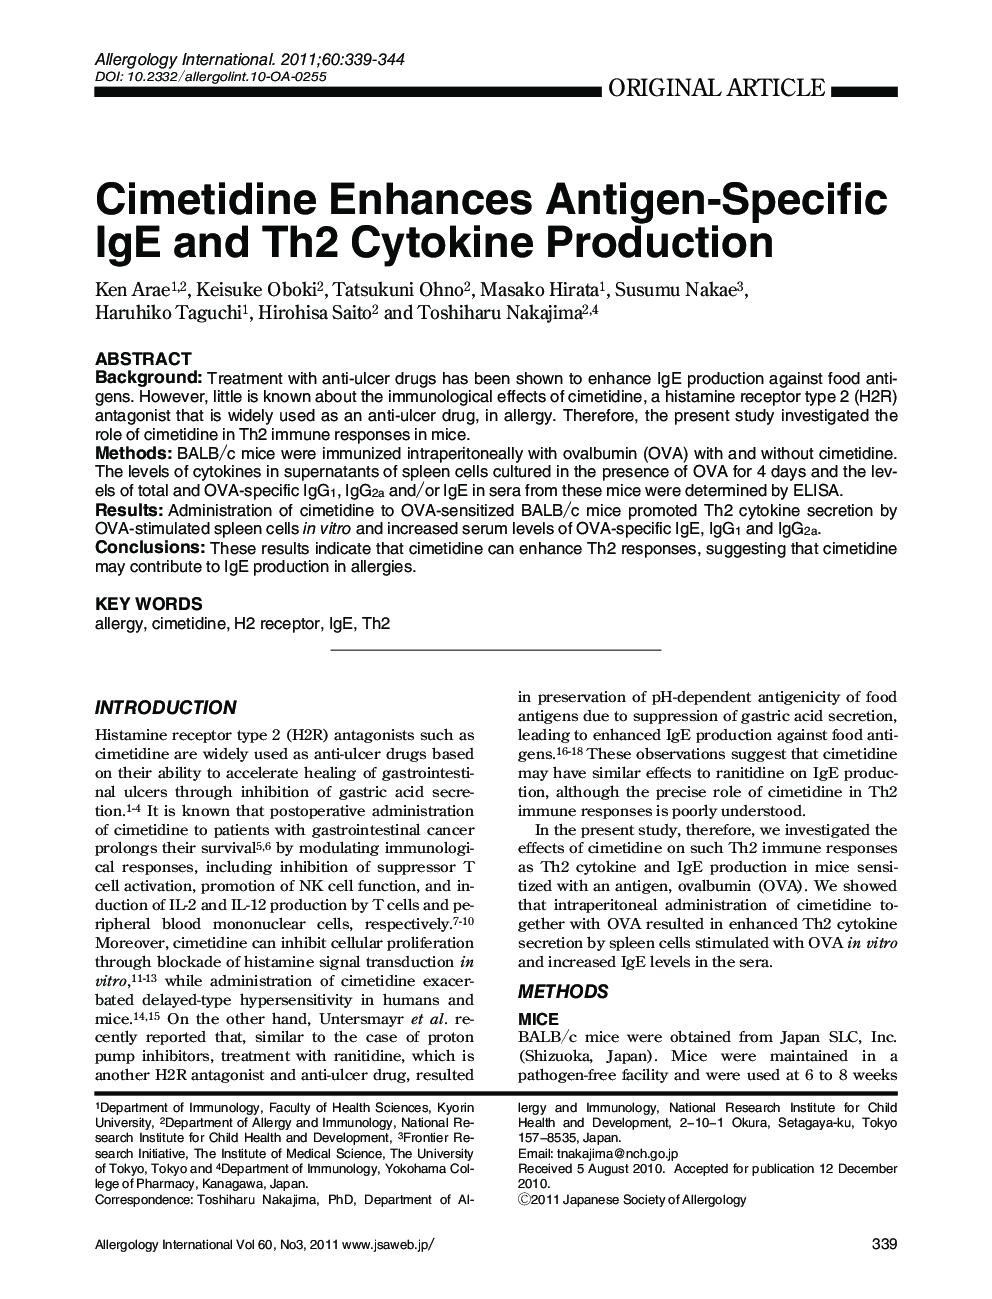 Cimetidine Enhances Antigen-Specific IgE and Th2 Cytokine Production